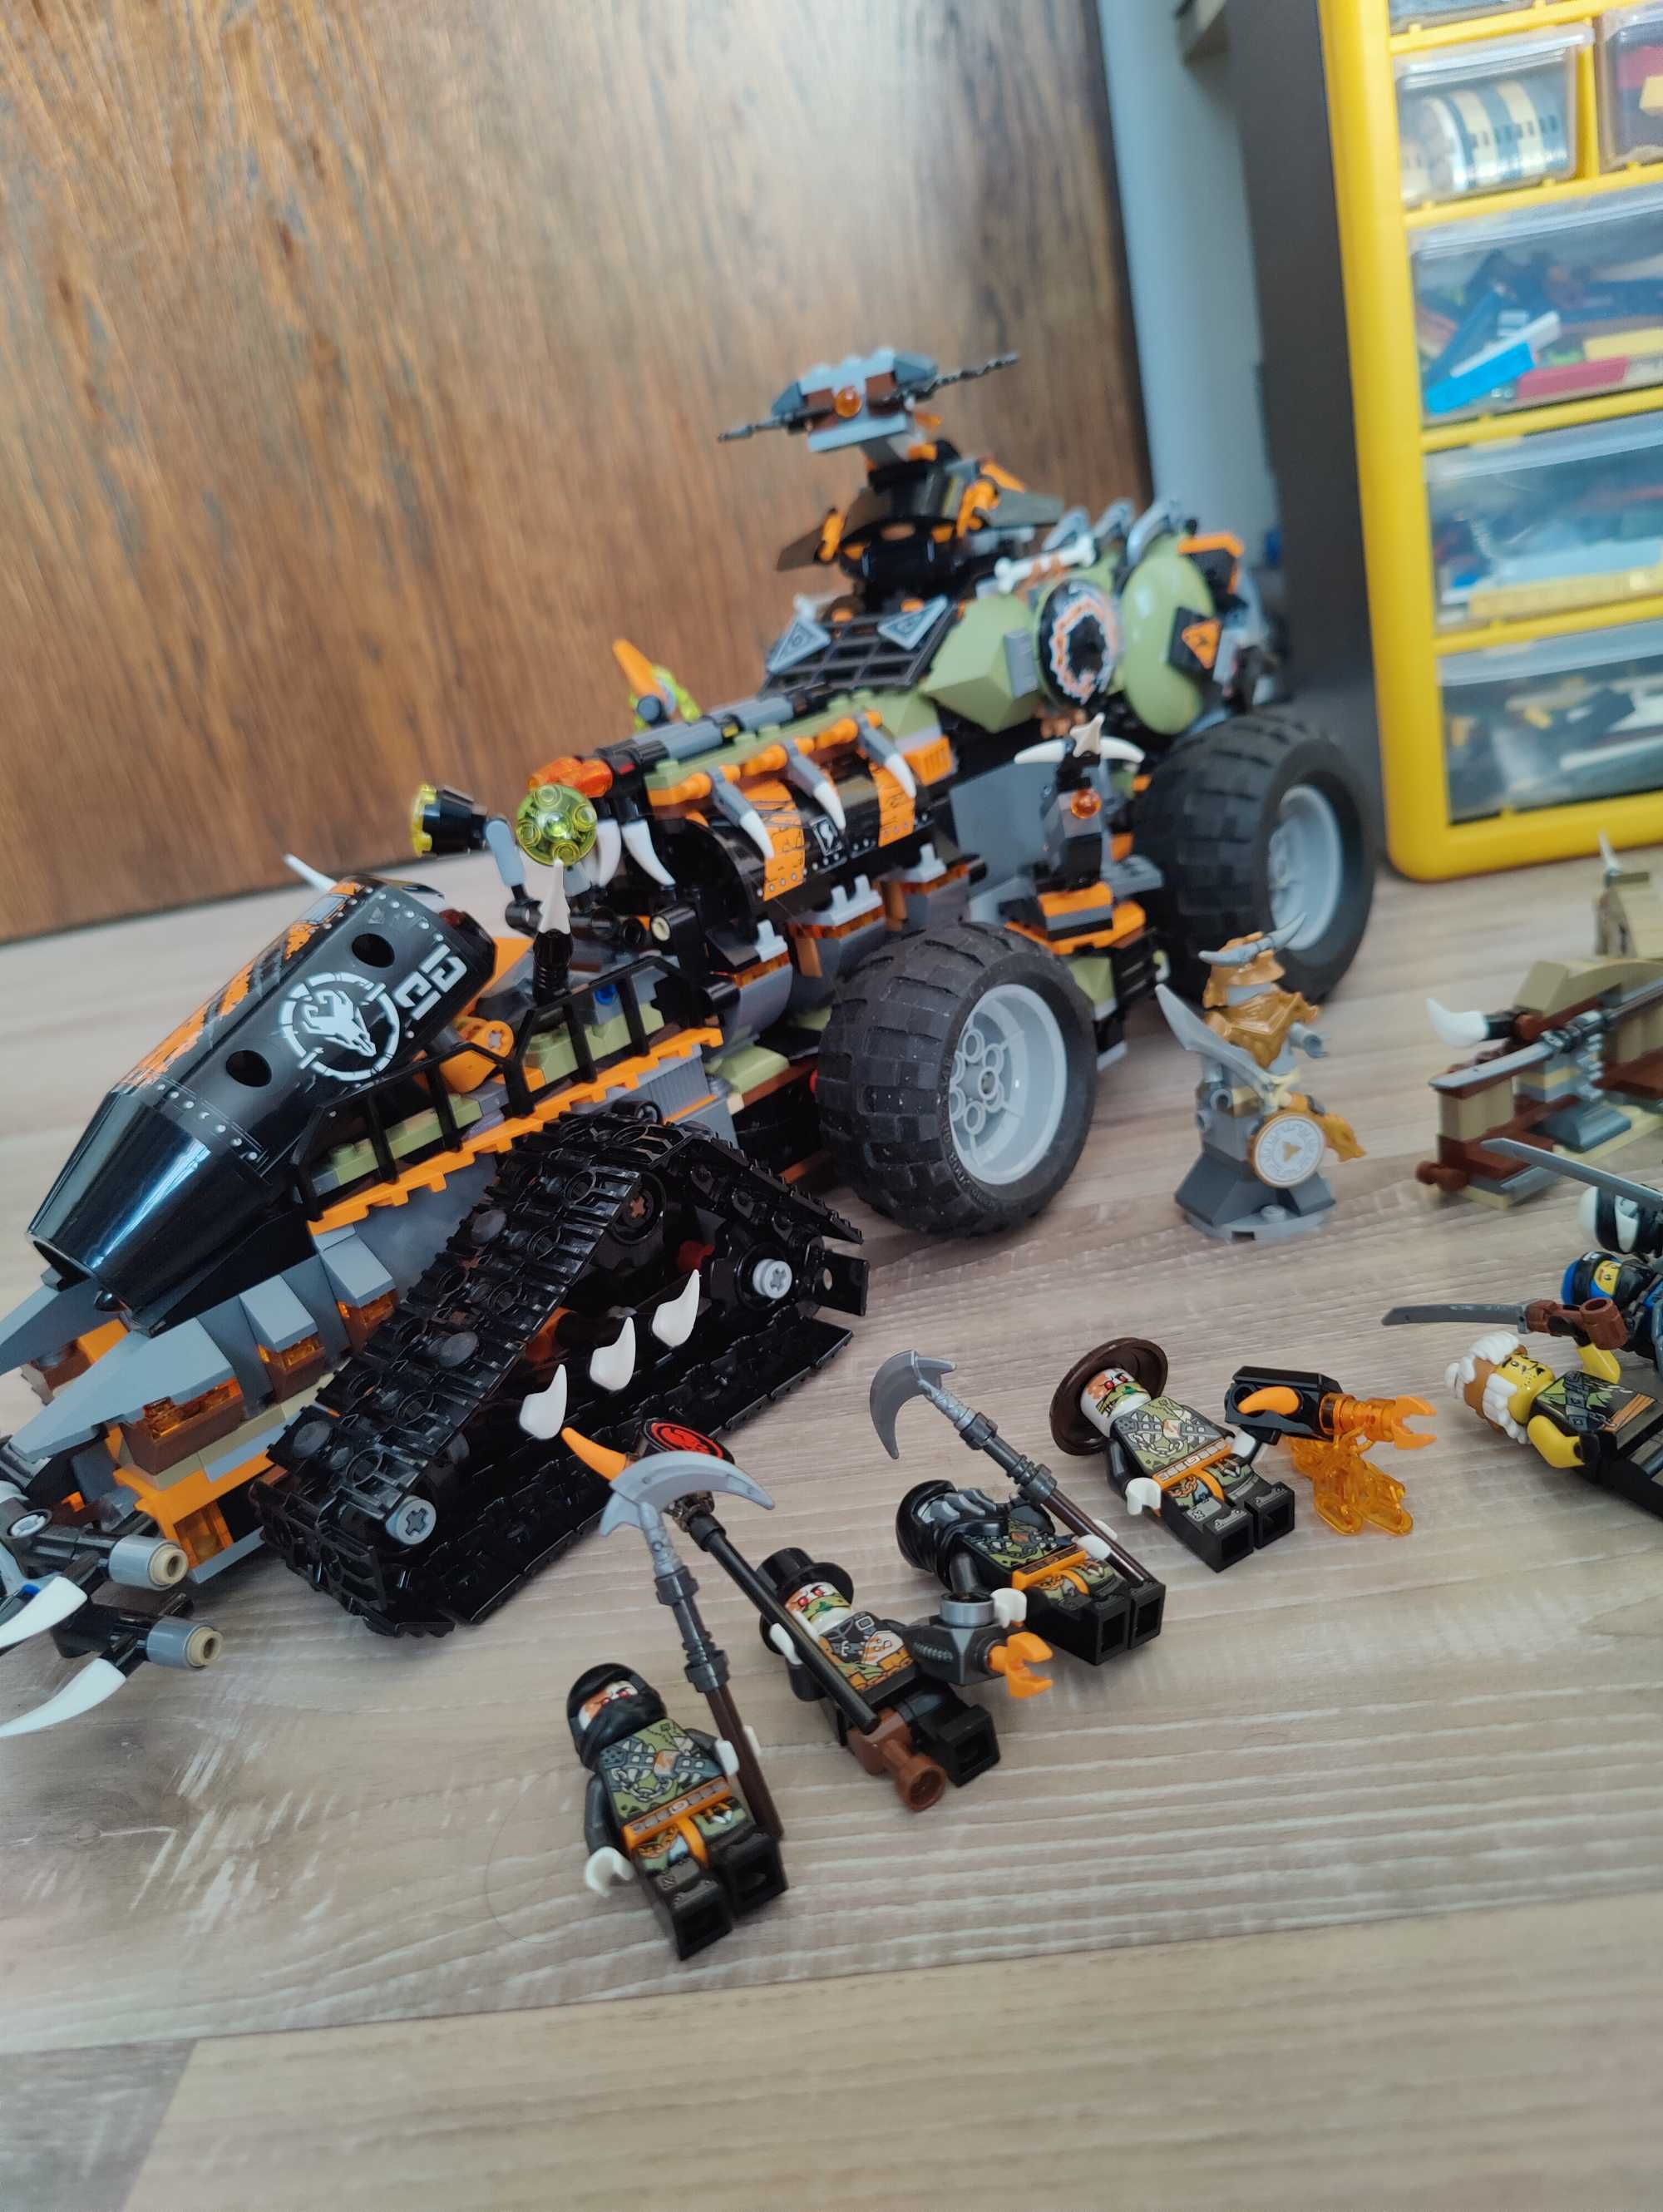 LEGO Ninjago - 70654 - Dieselnaut